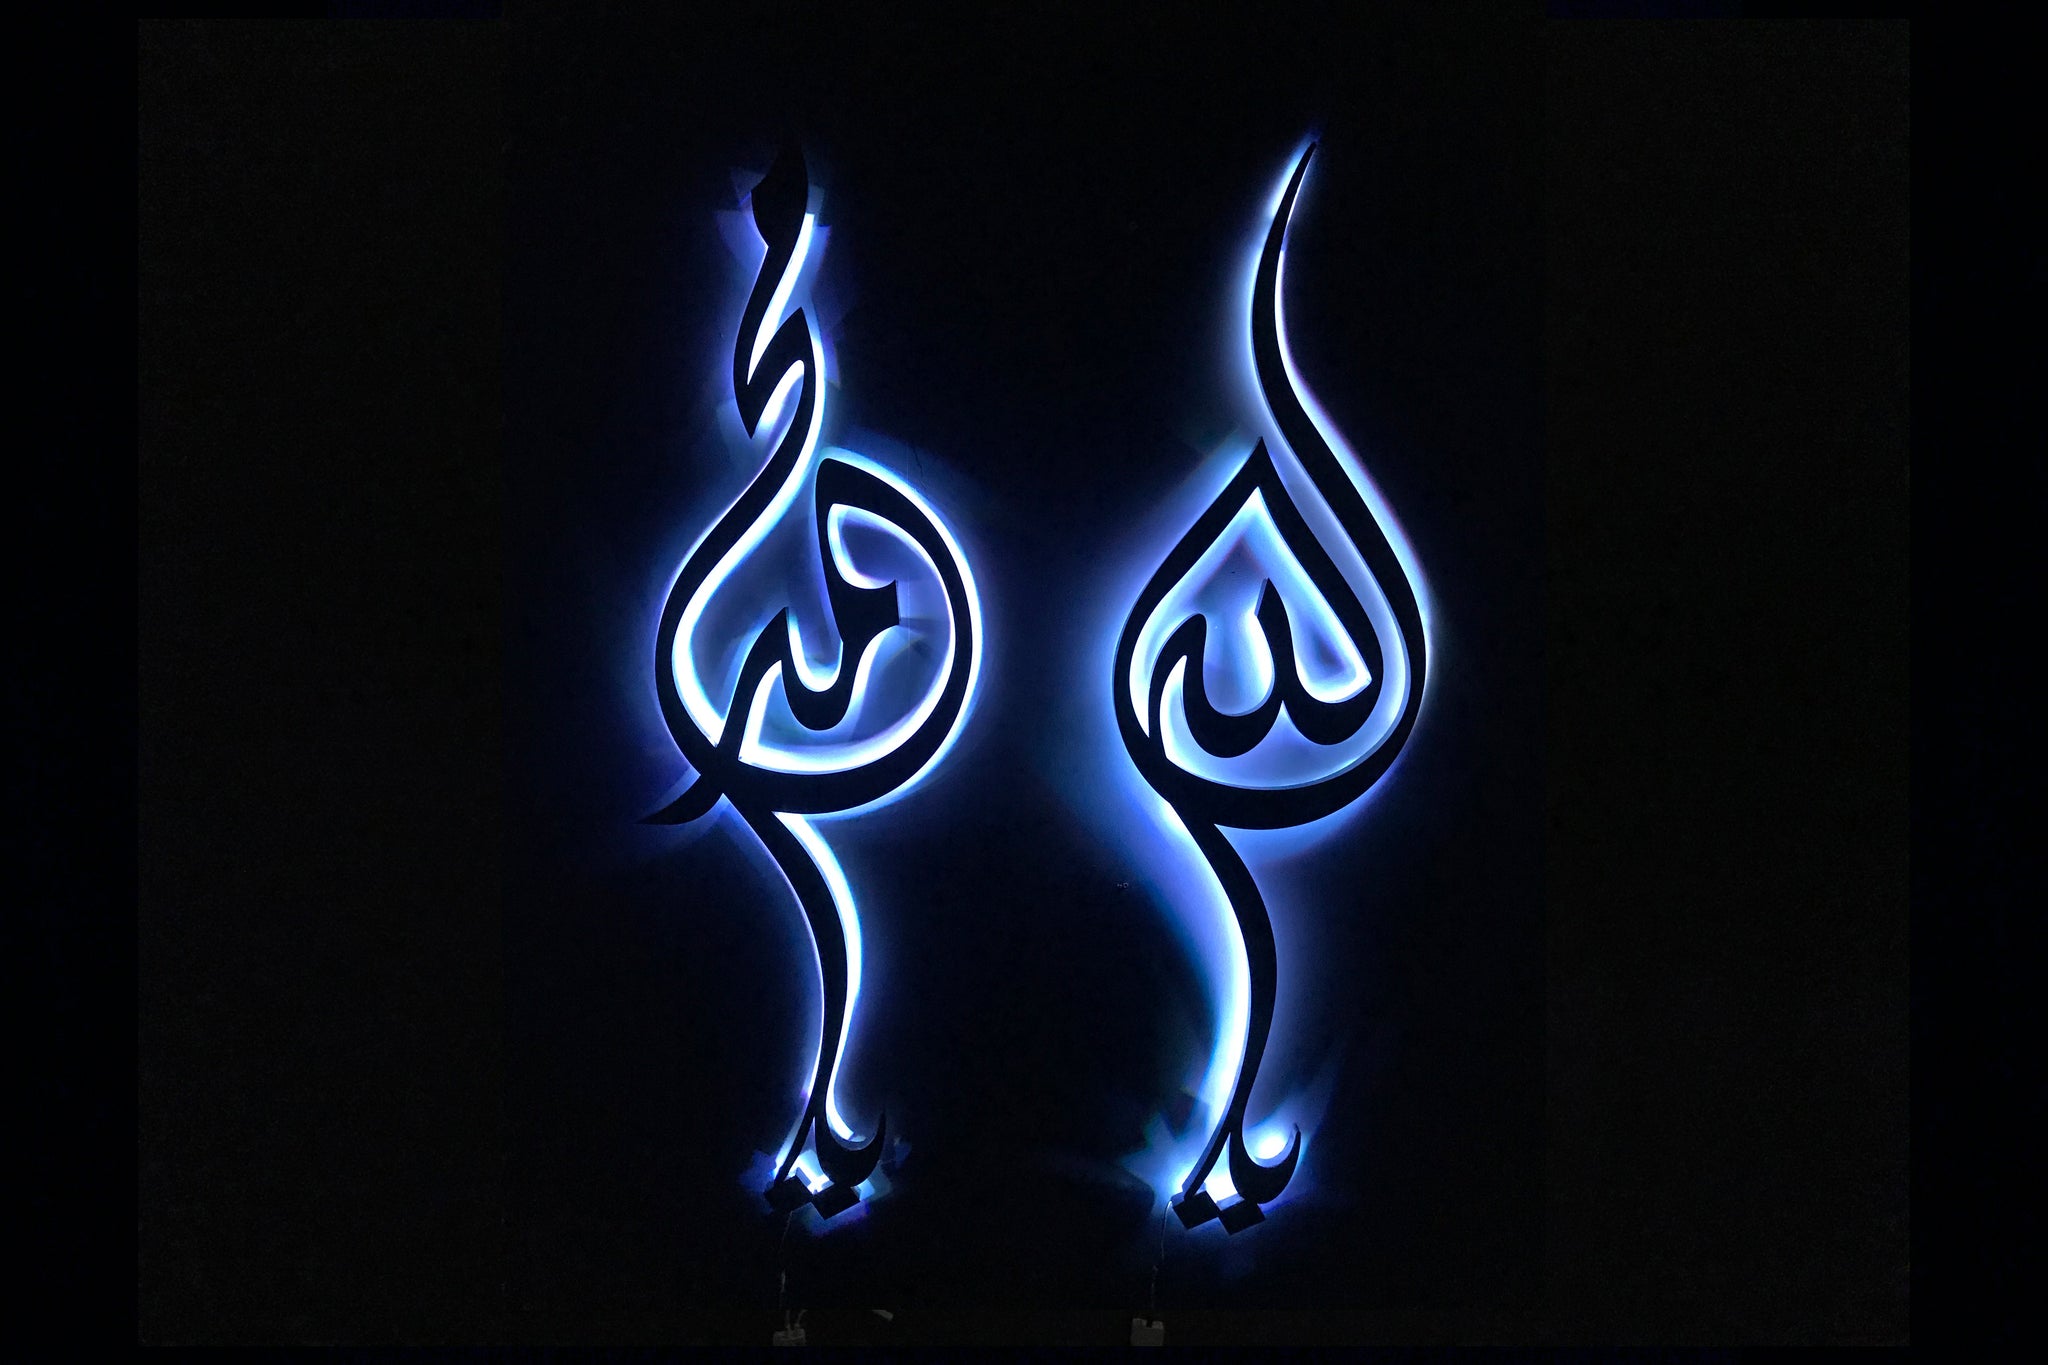 Ya Allah Ya Muhammad (PBUH) Stainless Steel 3D LED Wall Art Set